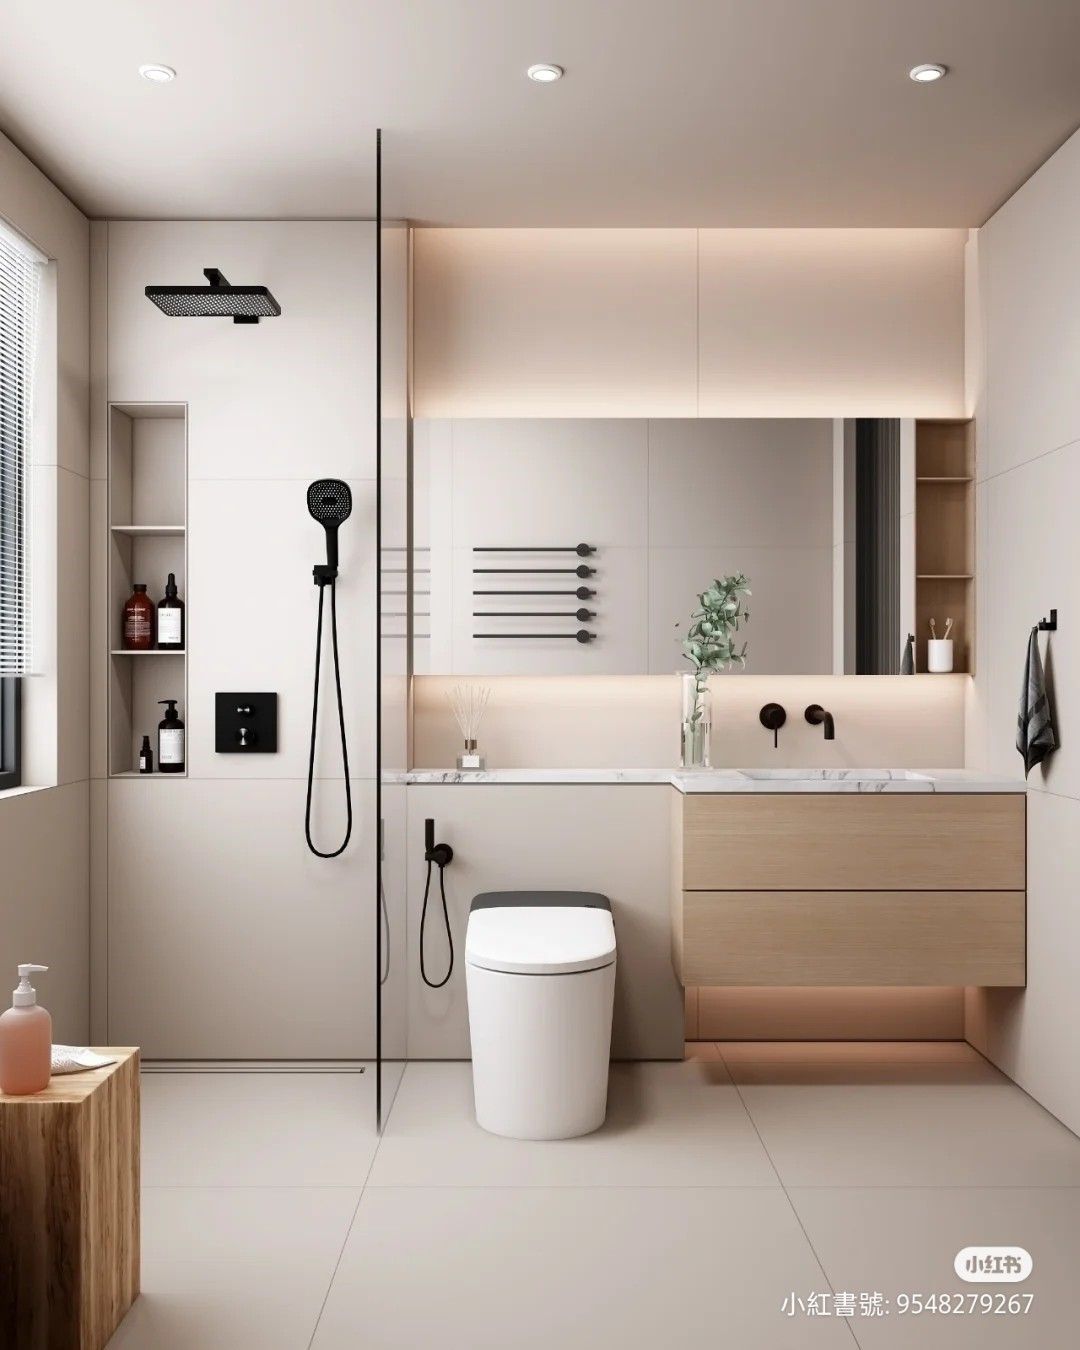 Ideas, Modern Bathroom Ideas : Pictures